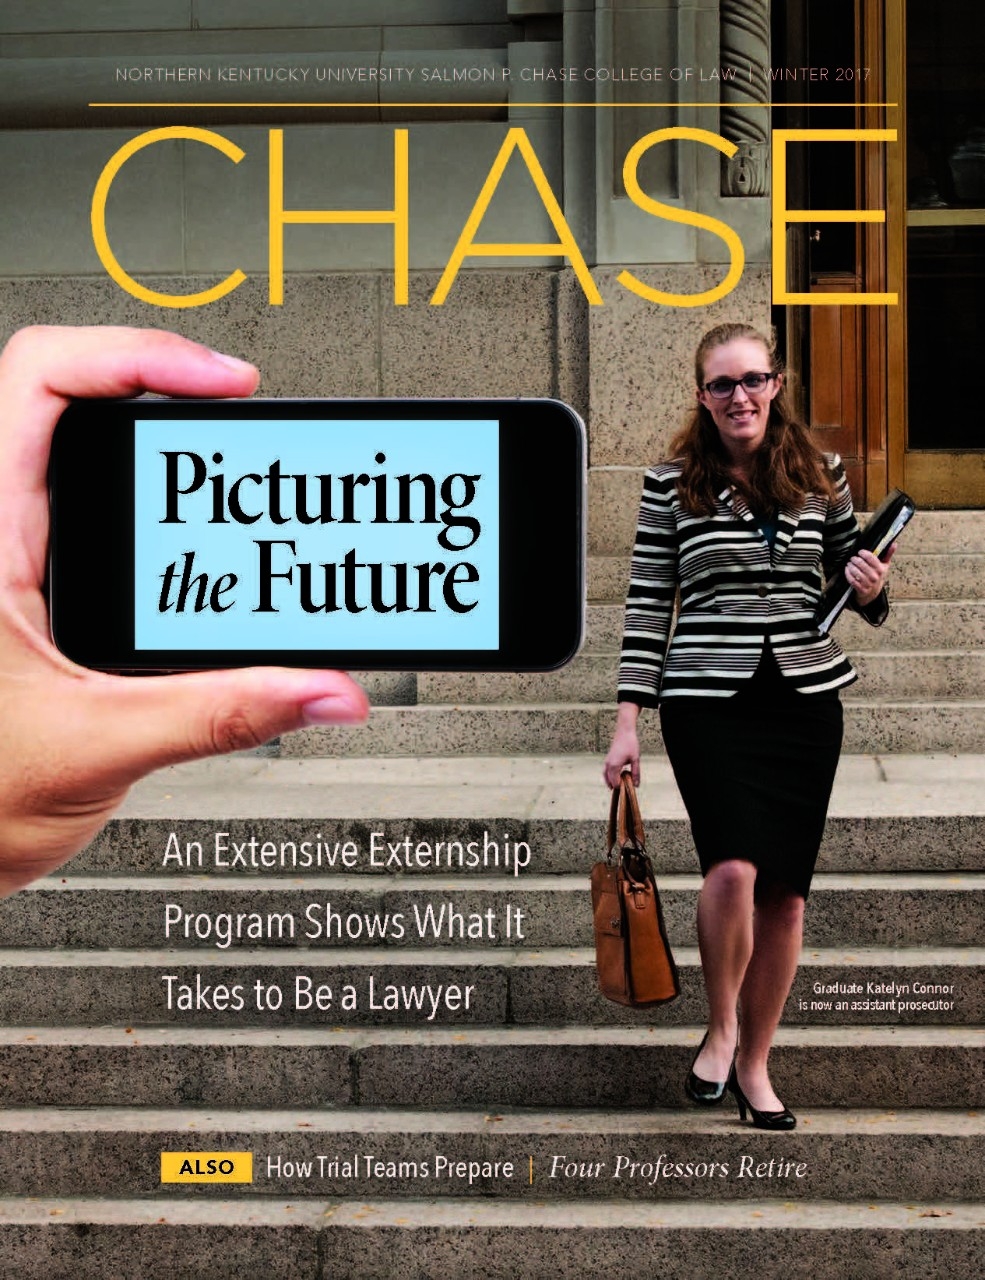 Chase Alumni Magazine Winter 2017